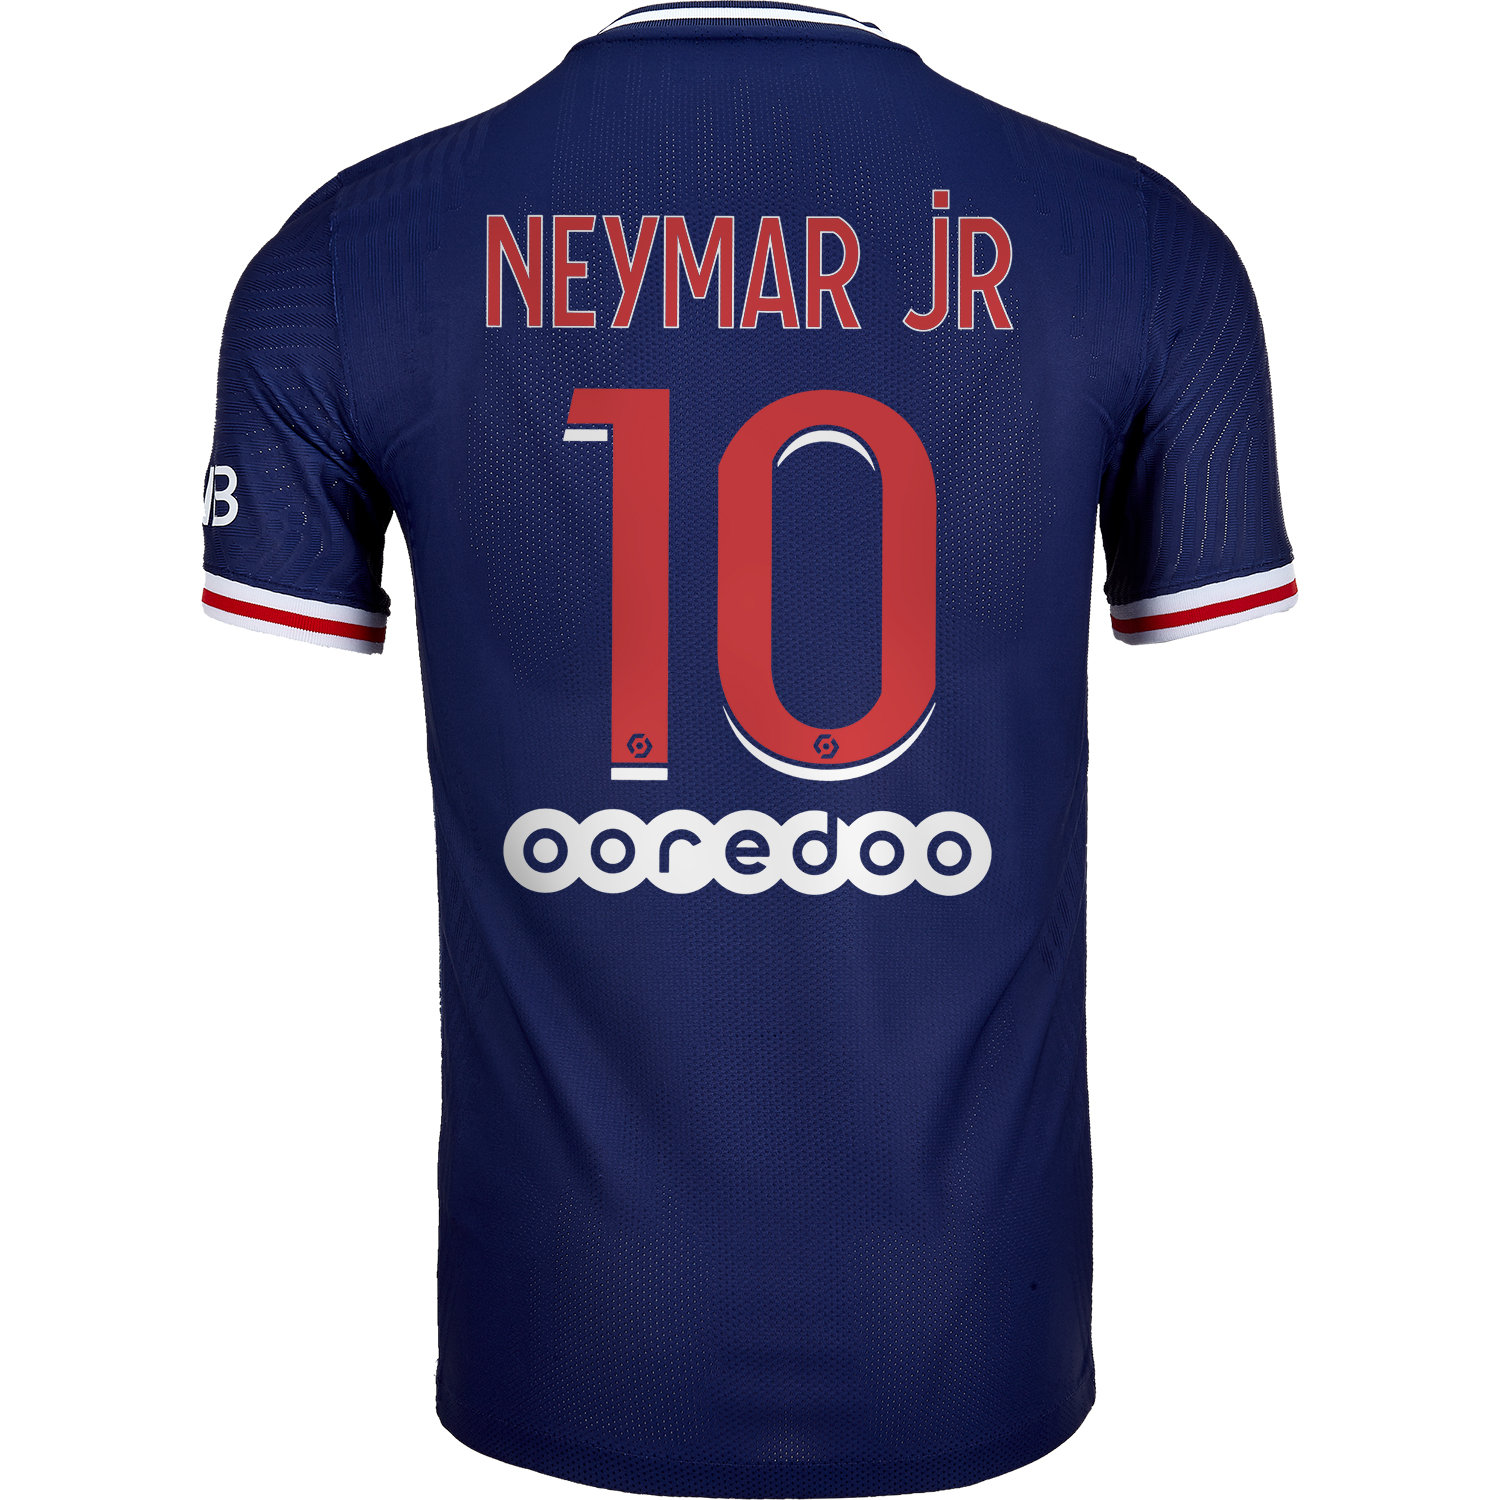 2020/21 Nike Neymar Jr PSG Home Match Jersey - SoccerPro